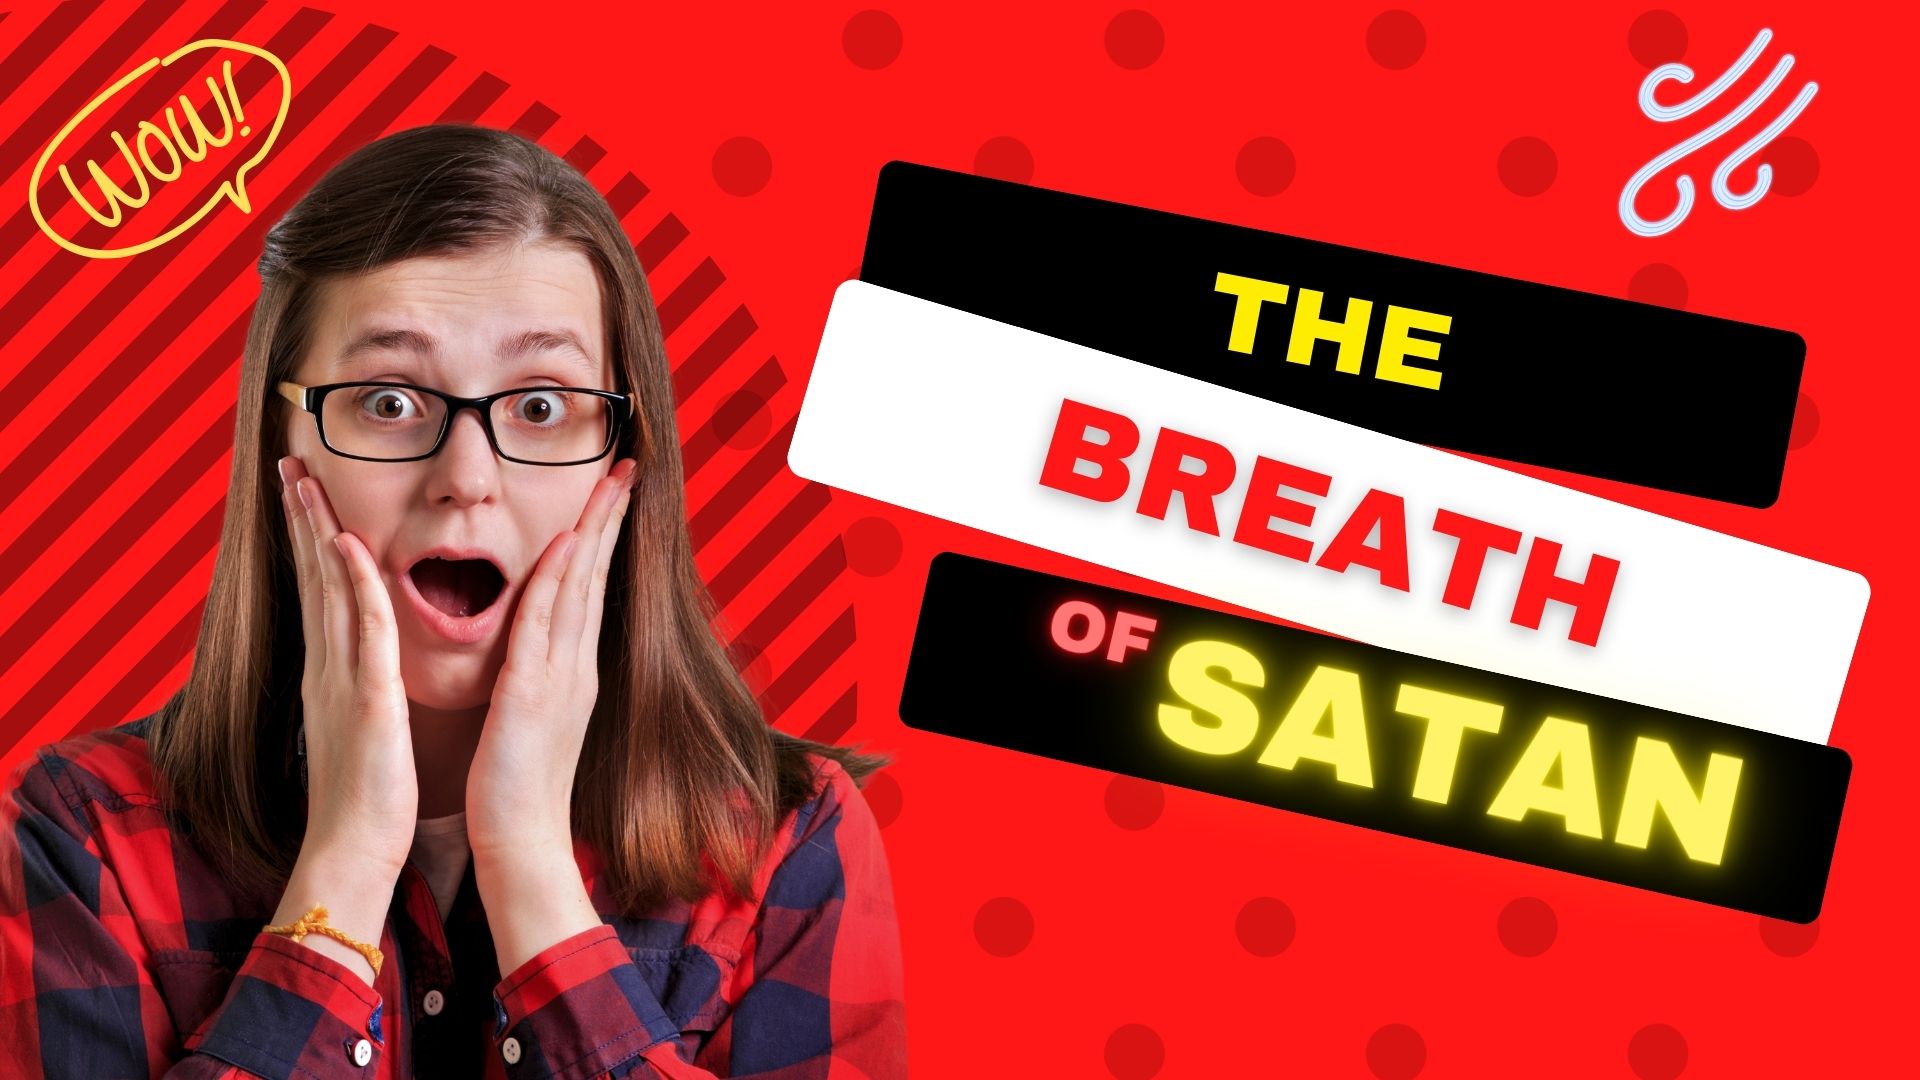 The Breath of Satan versus the Breath of Life